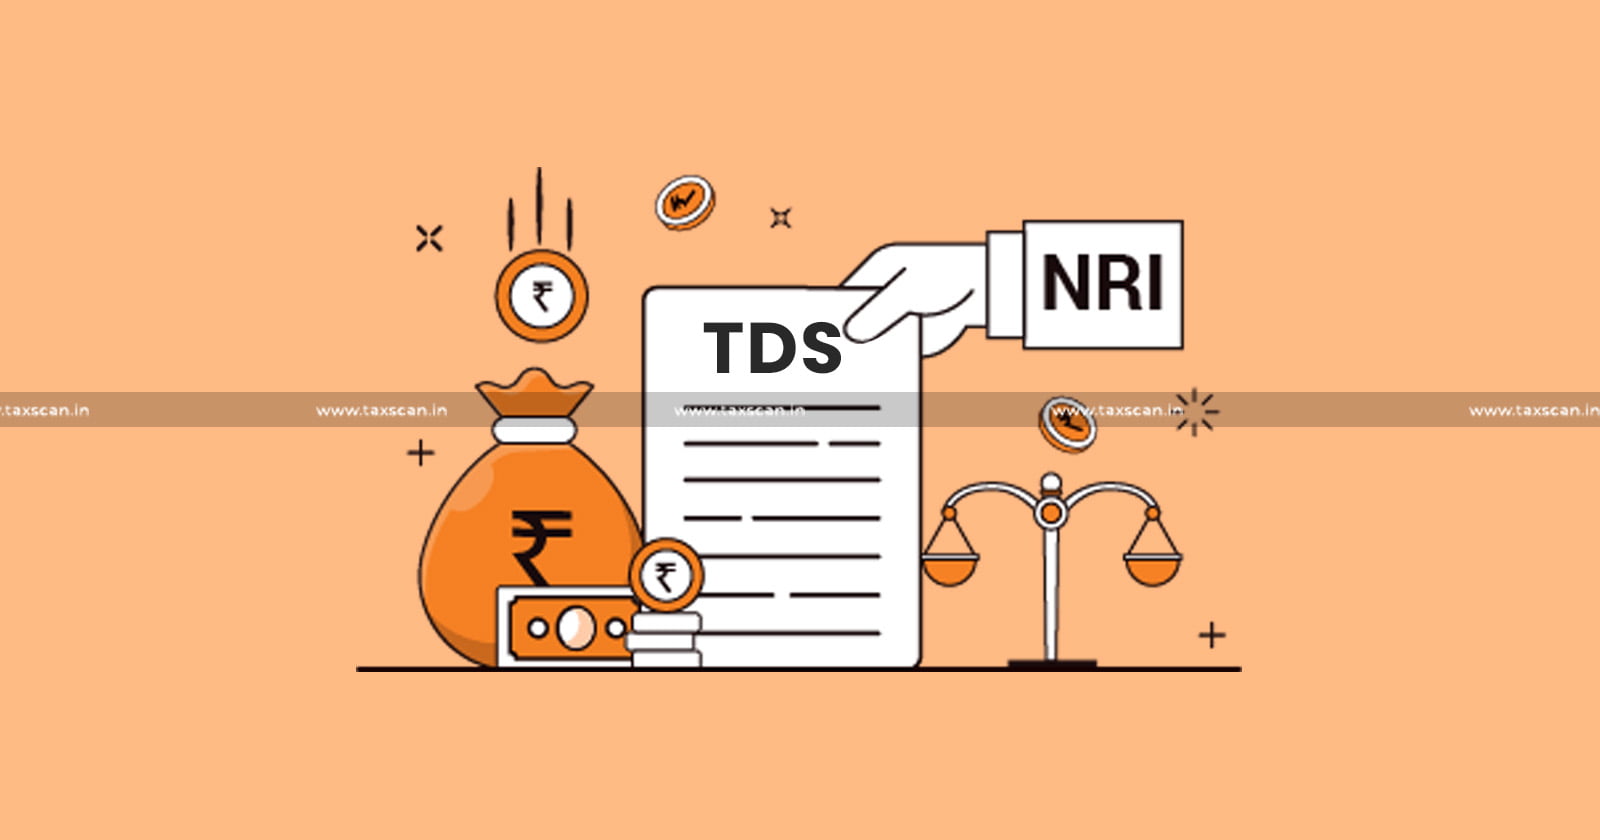 NRI - lower TDS - Nil TDS - NRI TDS - Income - Income earned in India - Taxscan